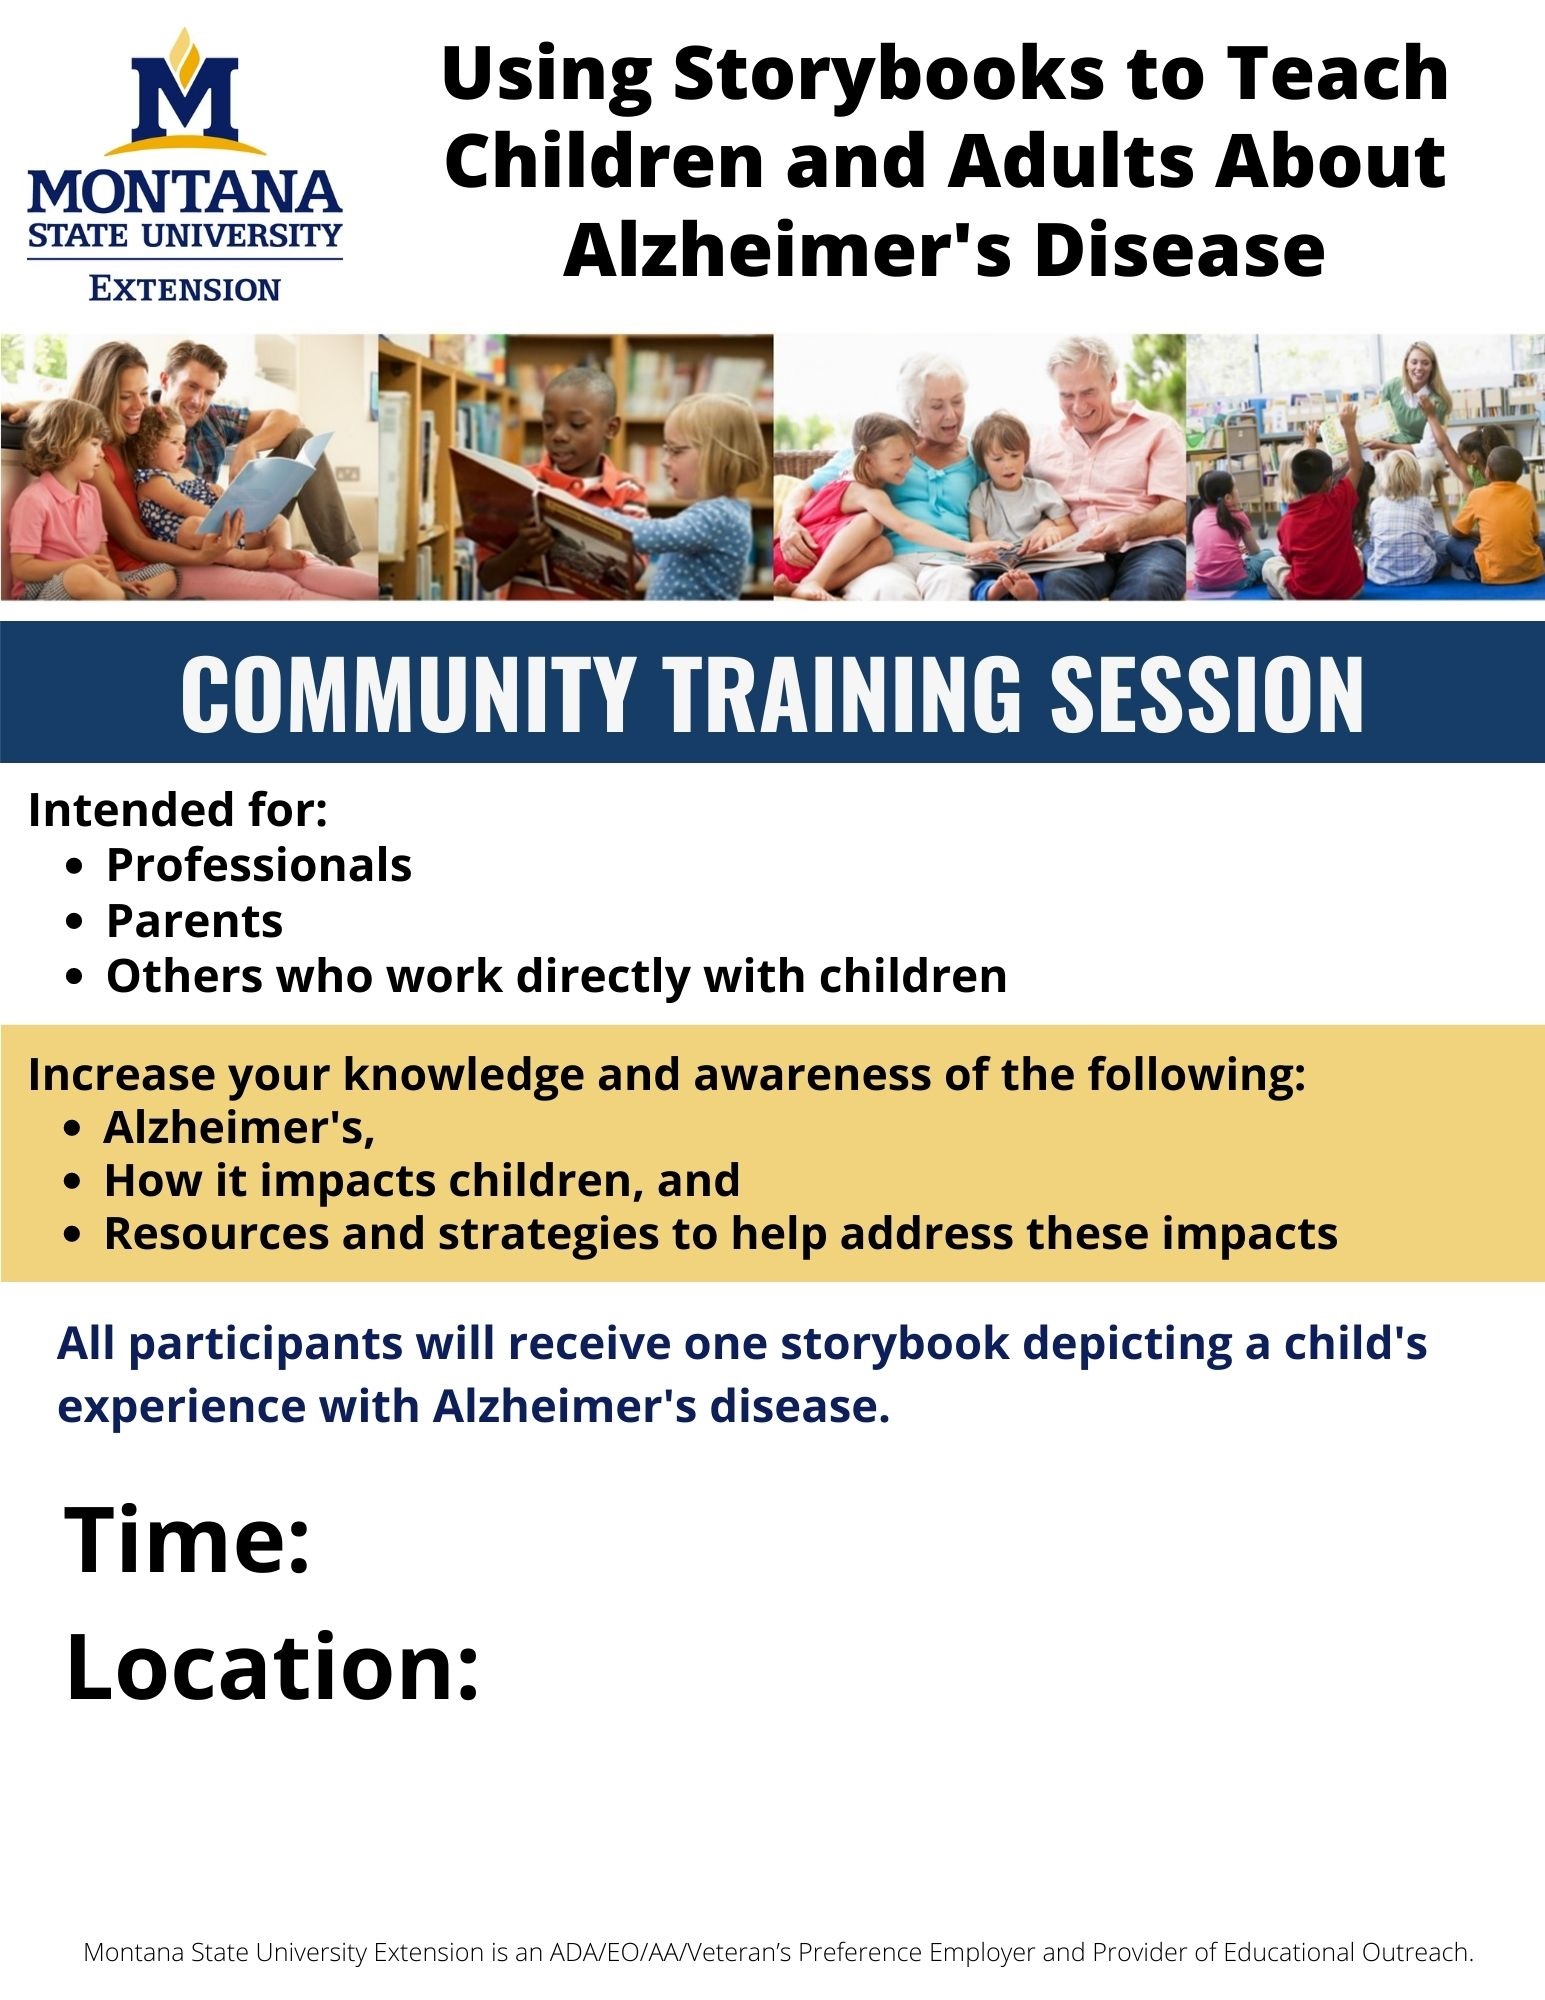 Community Training Session Flyer